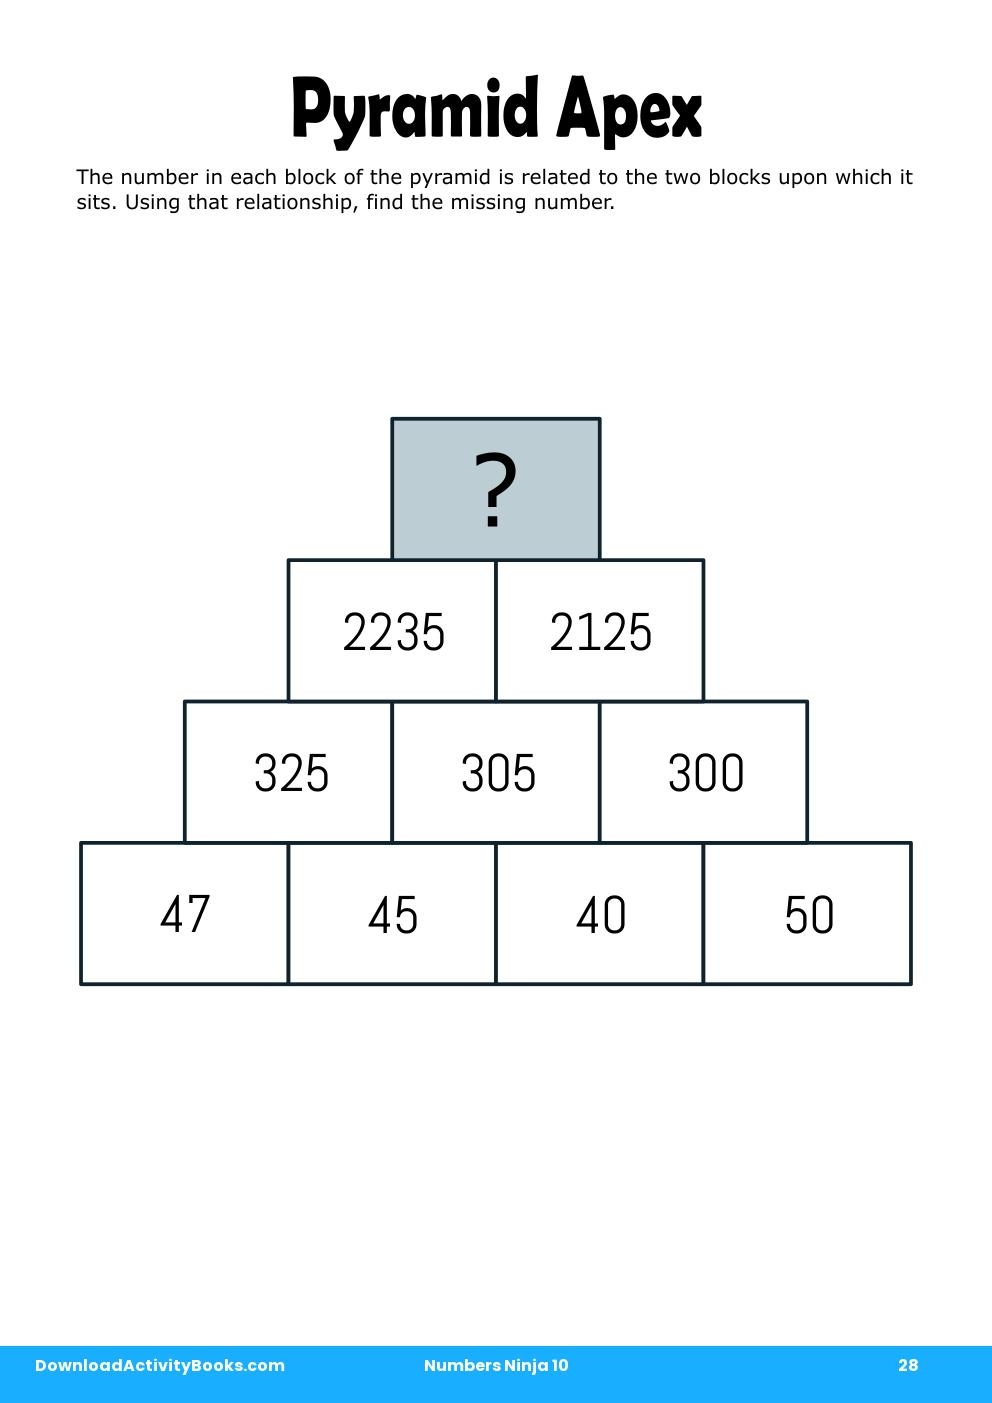 Pyramid Apex in Numbers Ninja 10